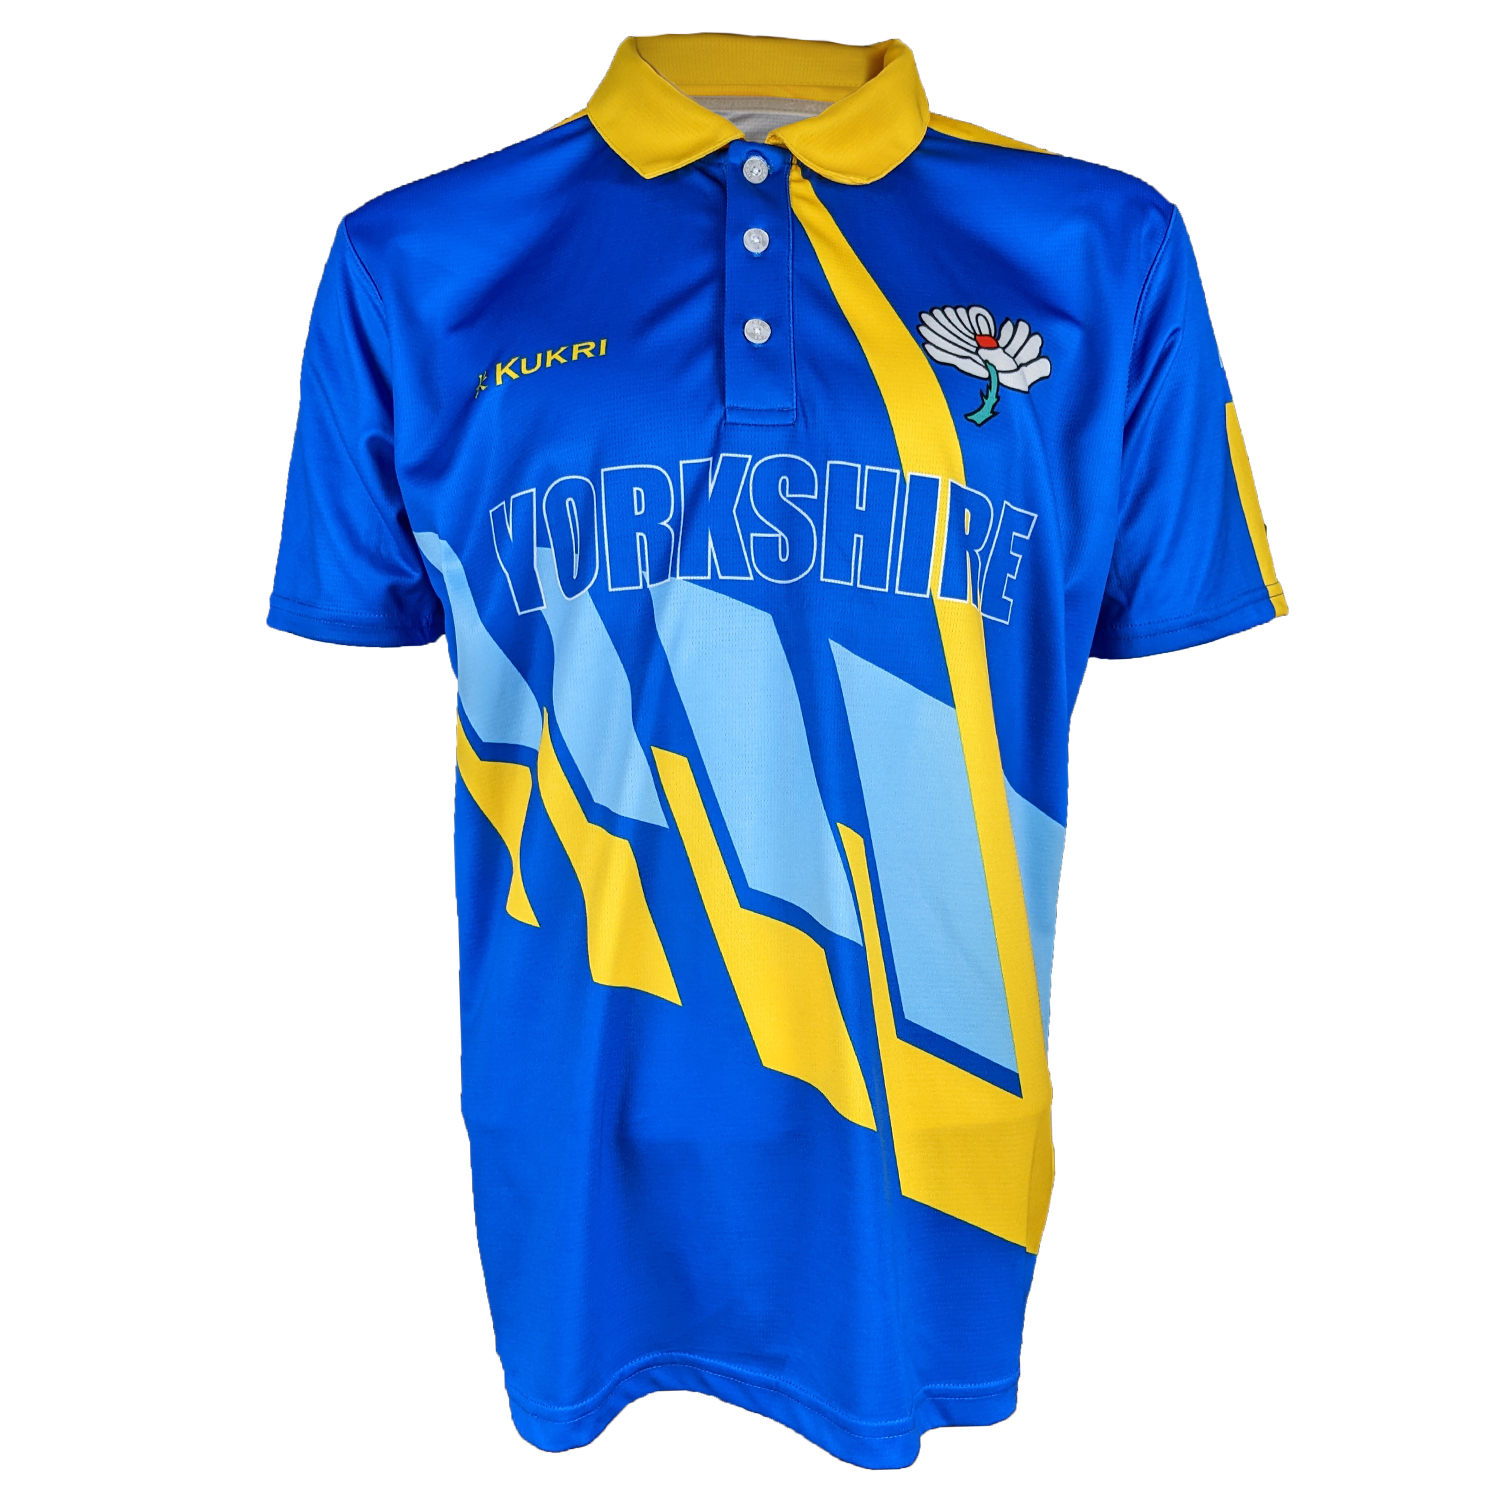 Limited Edition Yorkshire Cricket Retro 1993 Shirt